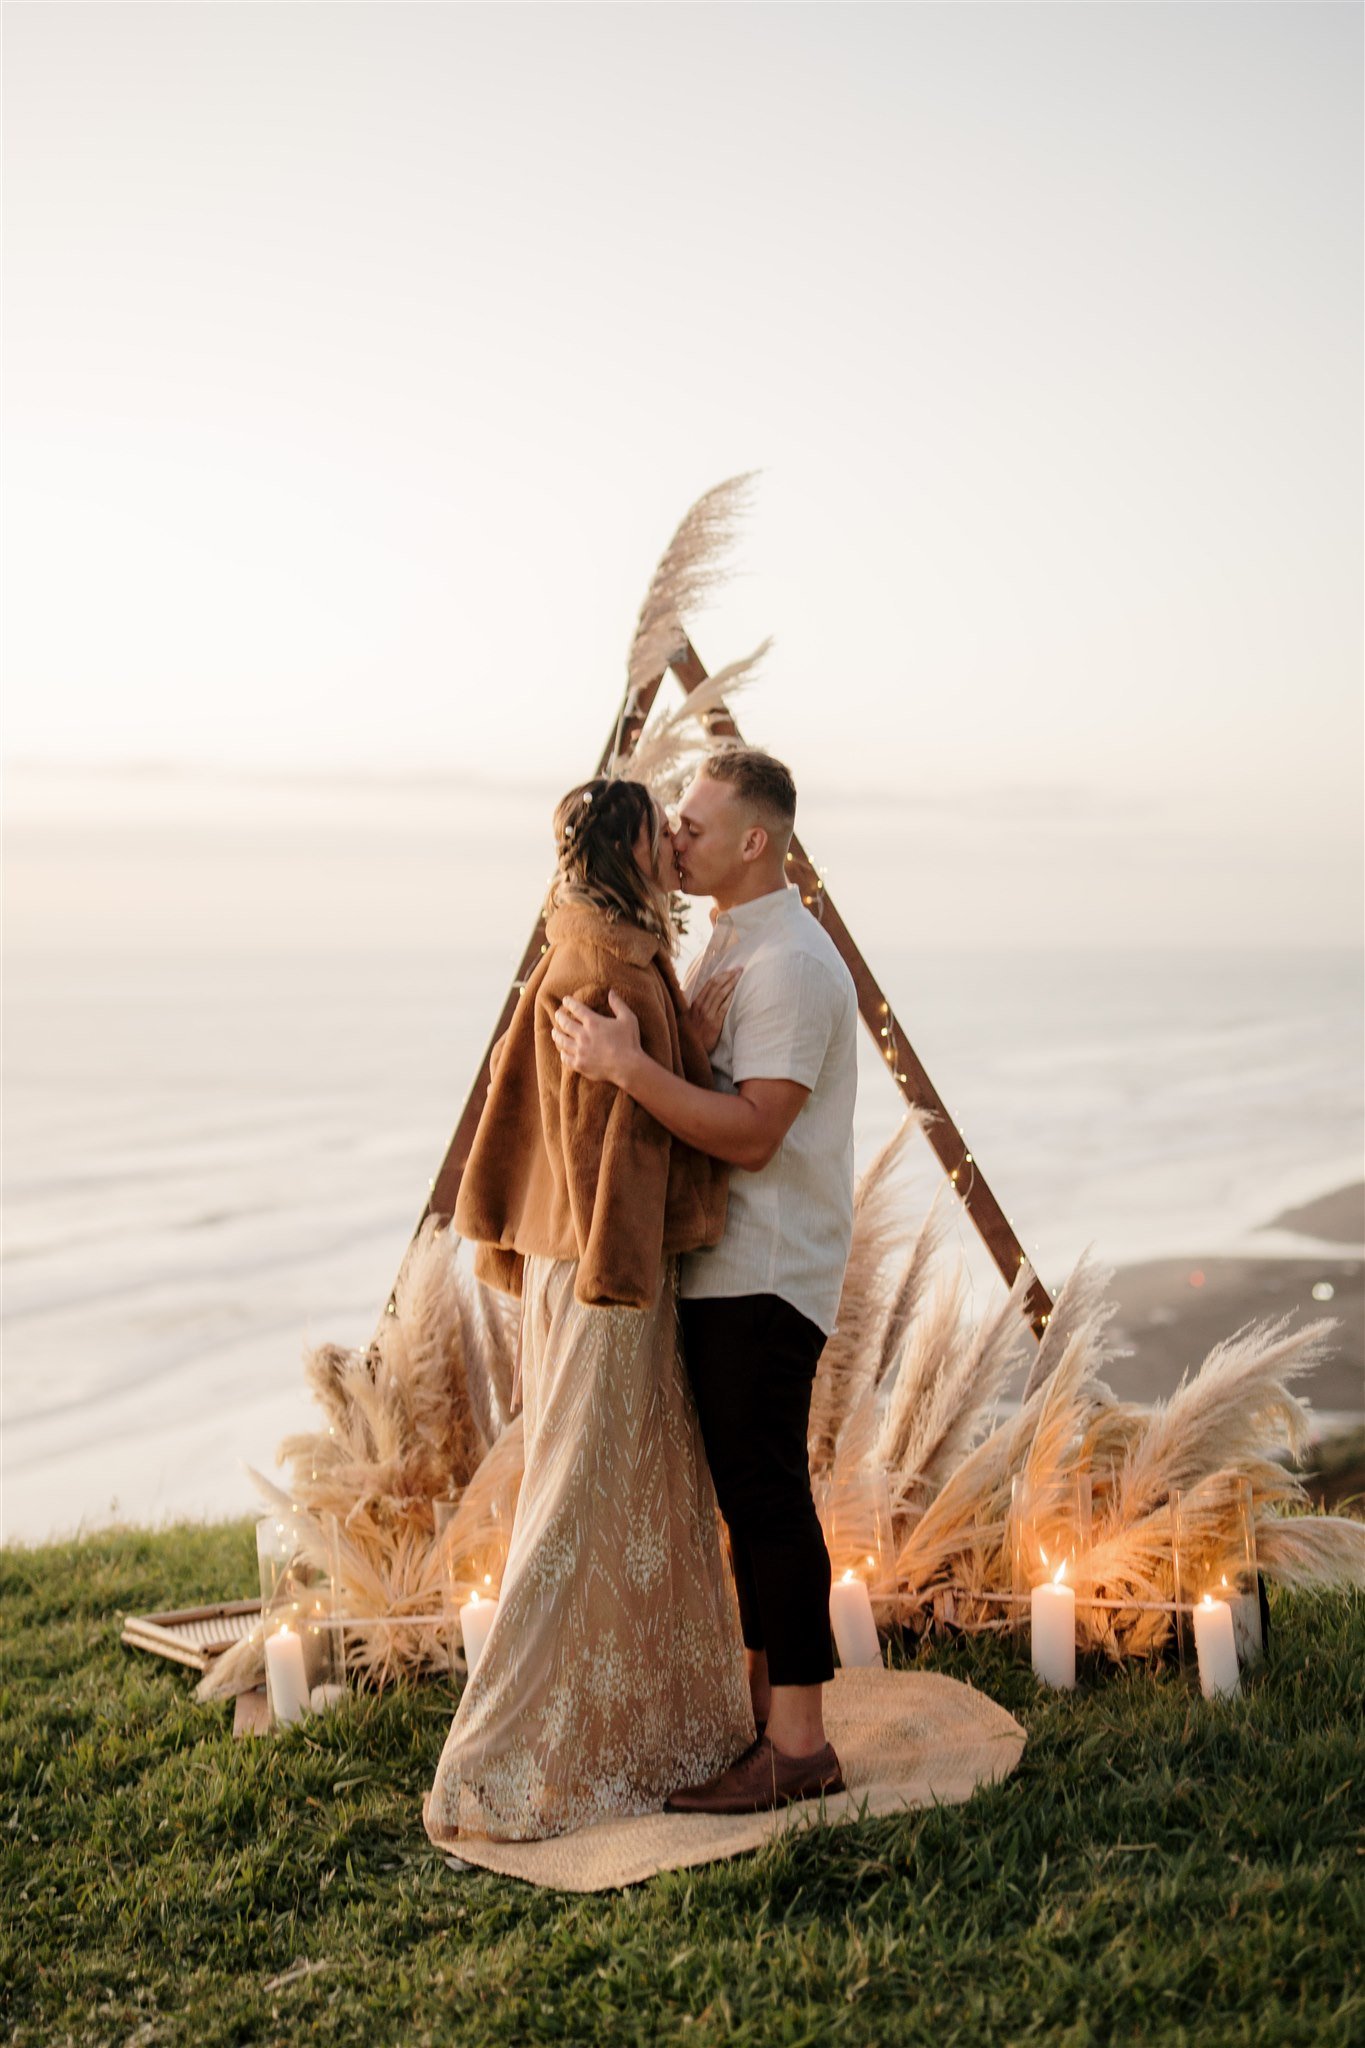 castaways-NZ-new-zealand-auckland-wedding-photographer-photography-videography-film-dear-white-productions-best-venue-waiuku-engagement-elopement-style-beach-intimate (412).jpg